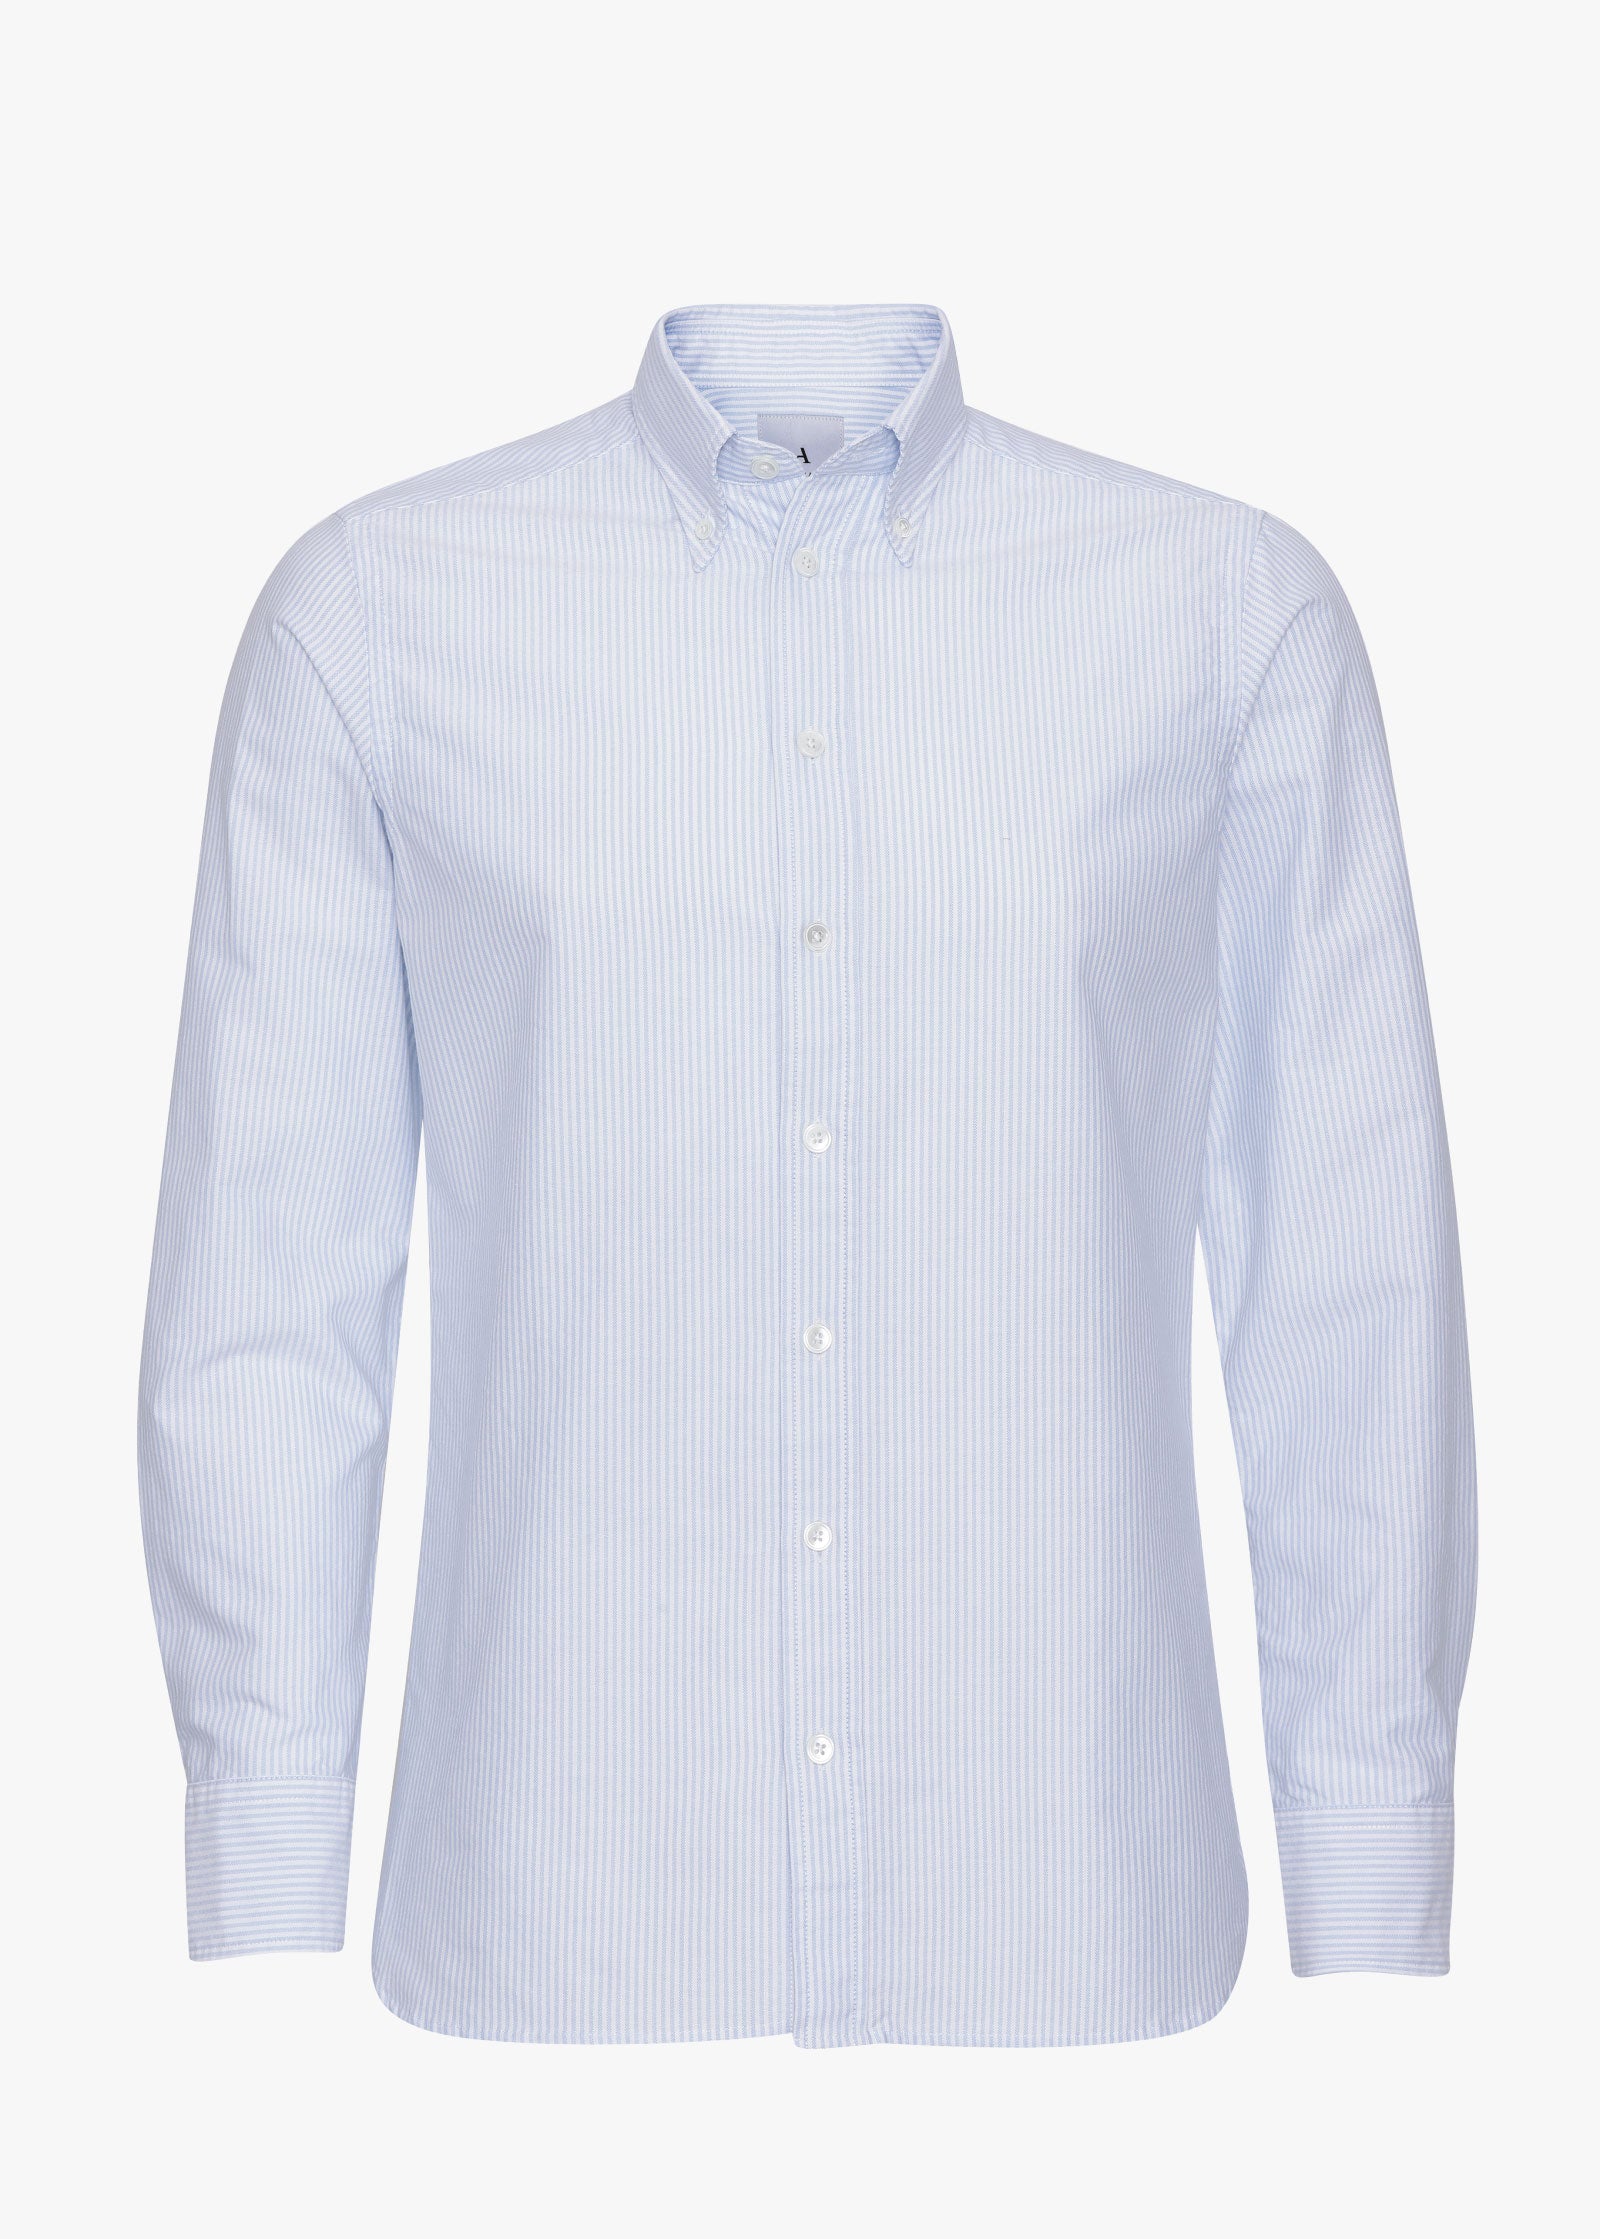 Oxford Shirt, Blue White Striped